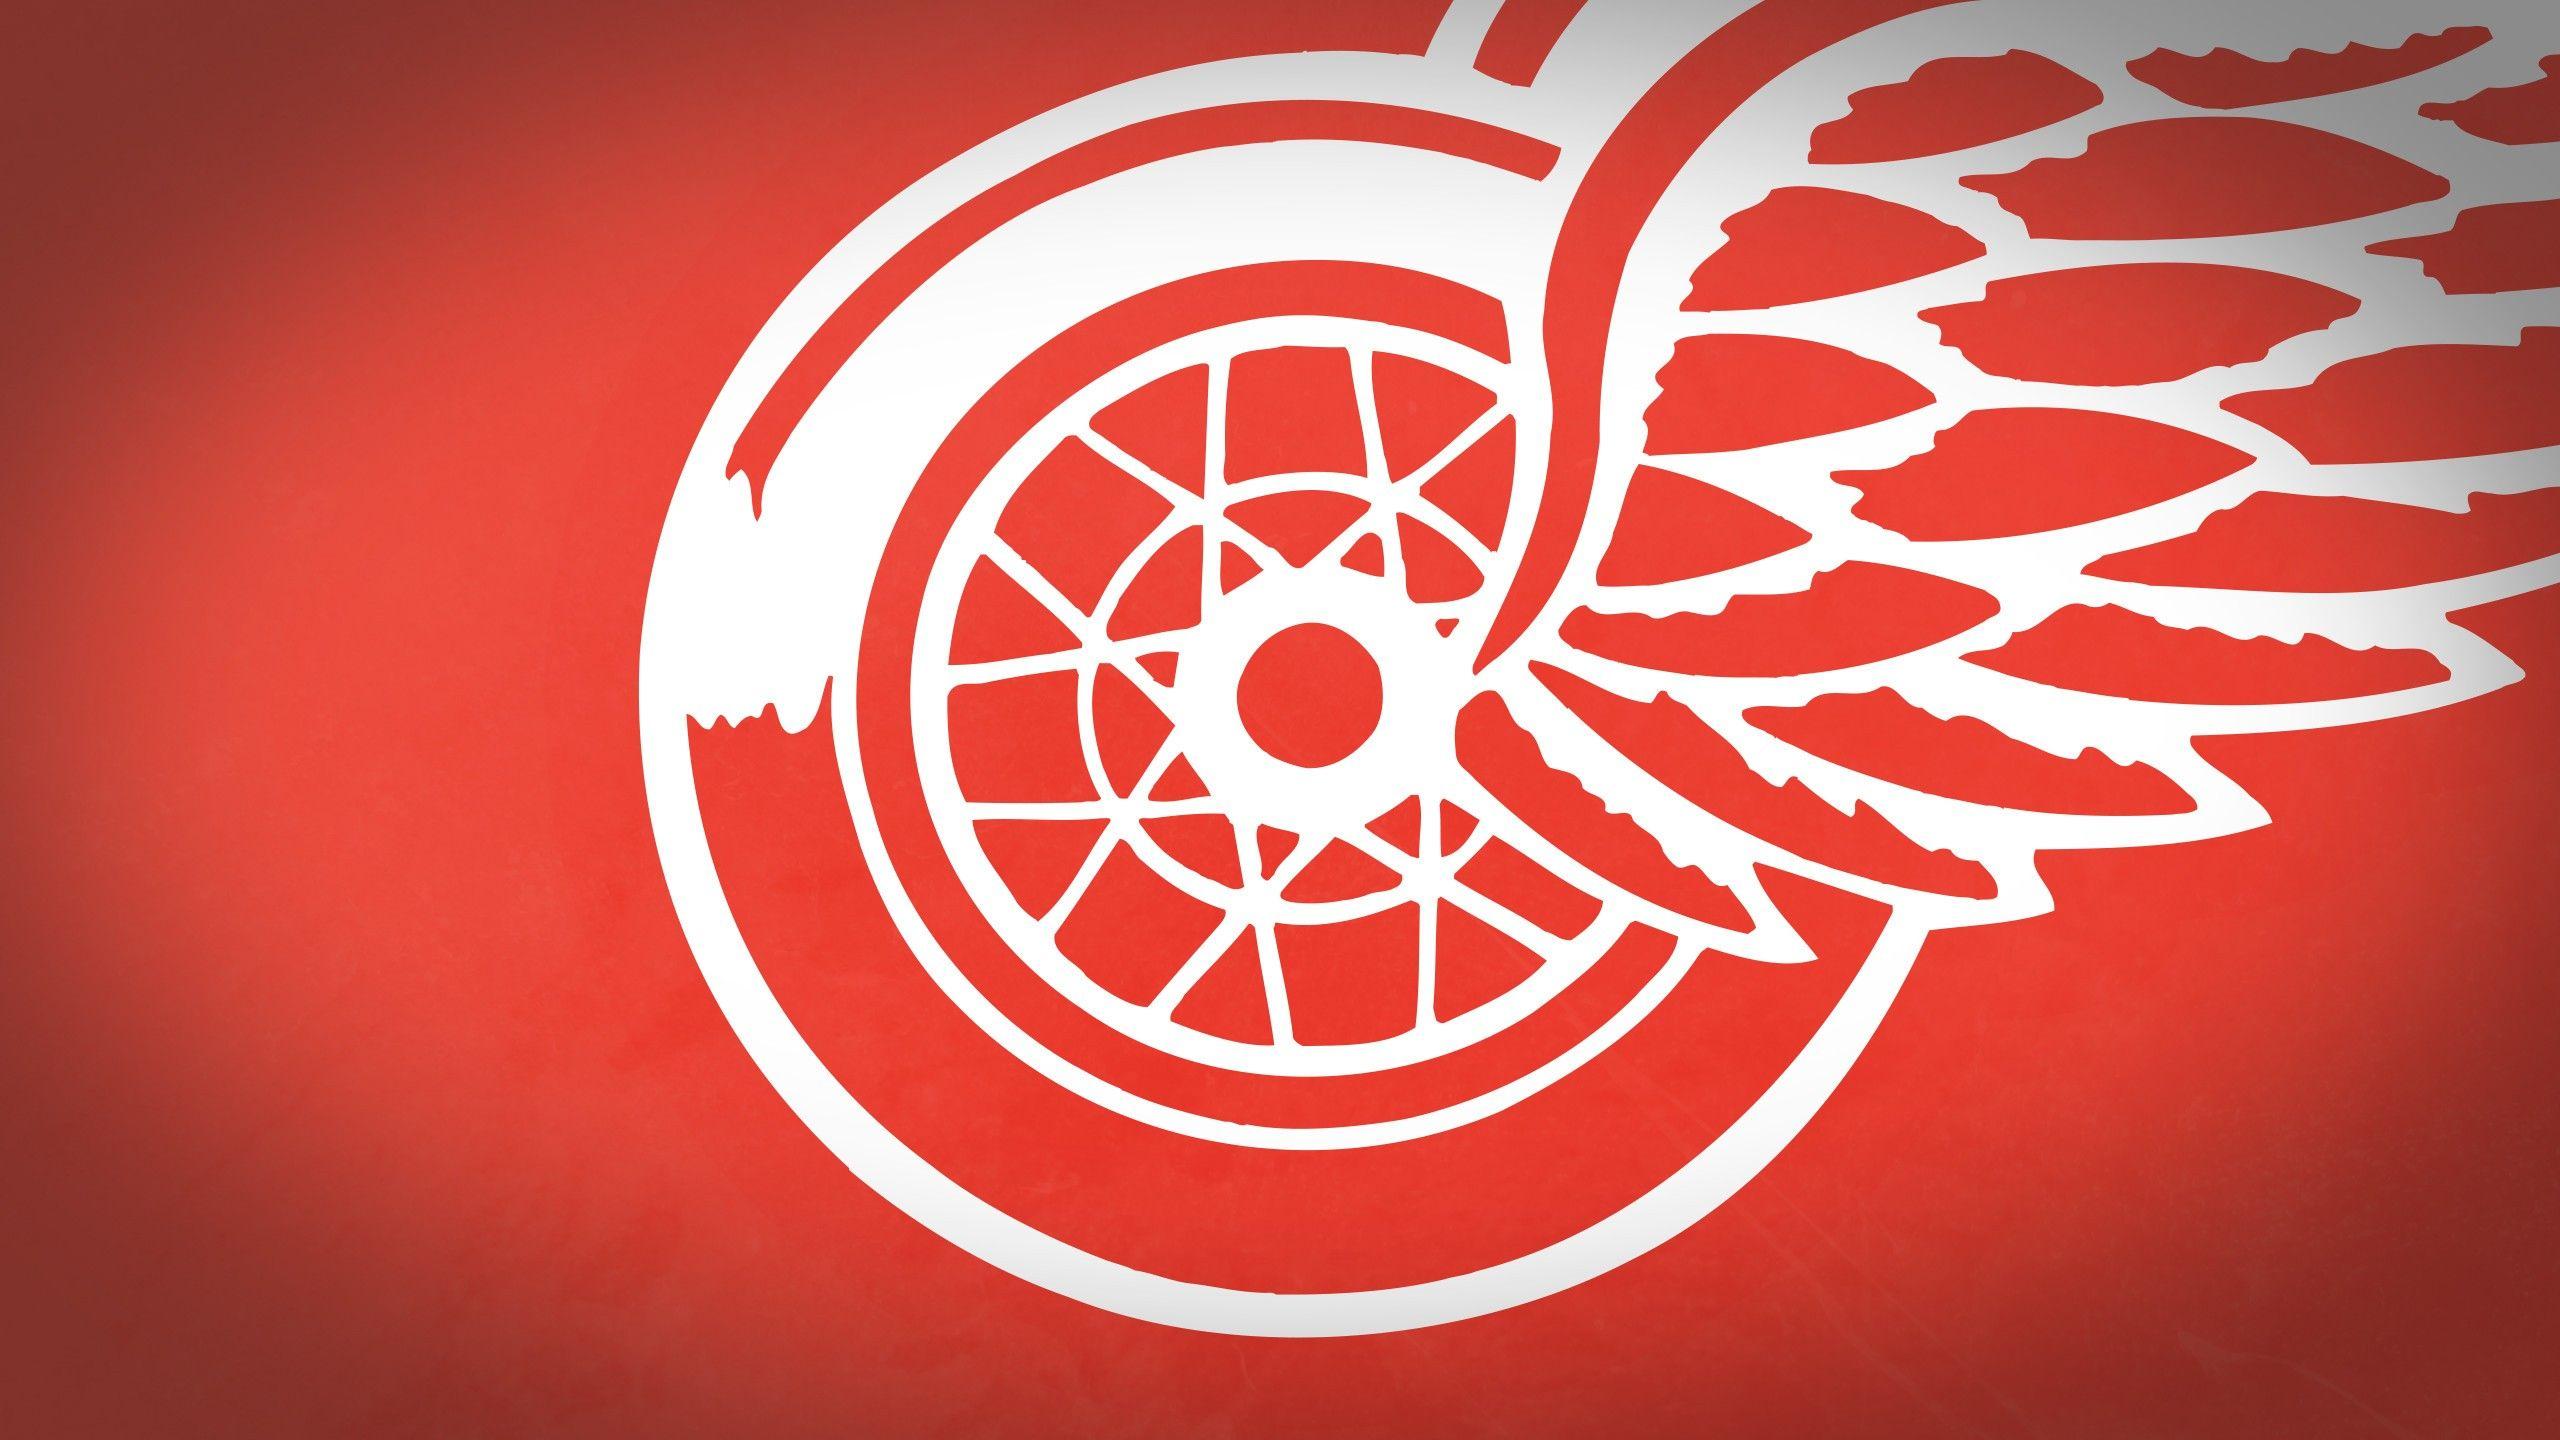 Detroit Red Wings Wallpaper, HD Image Detroit Red Wings